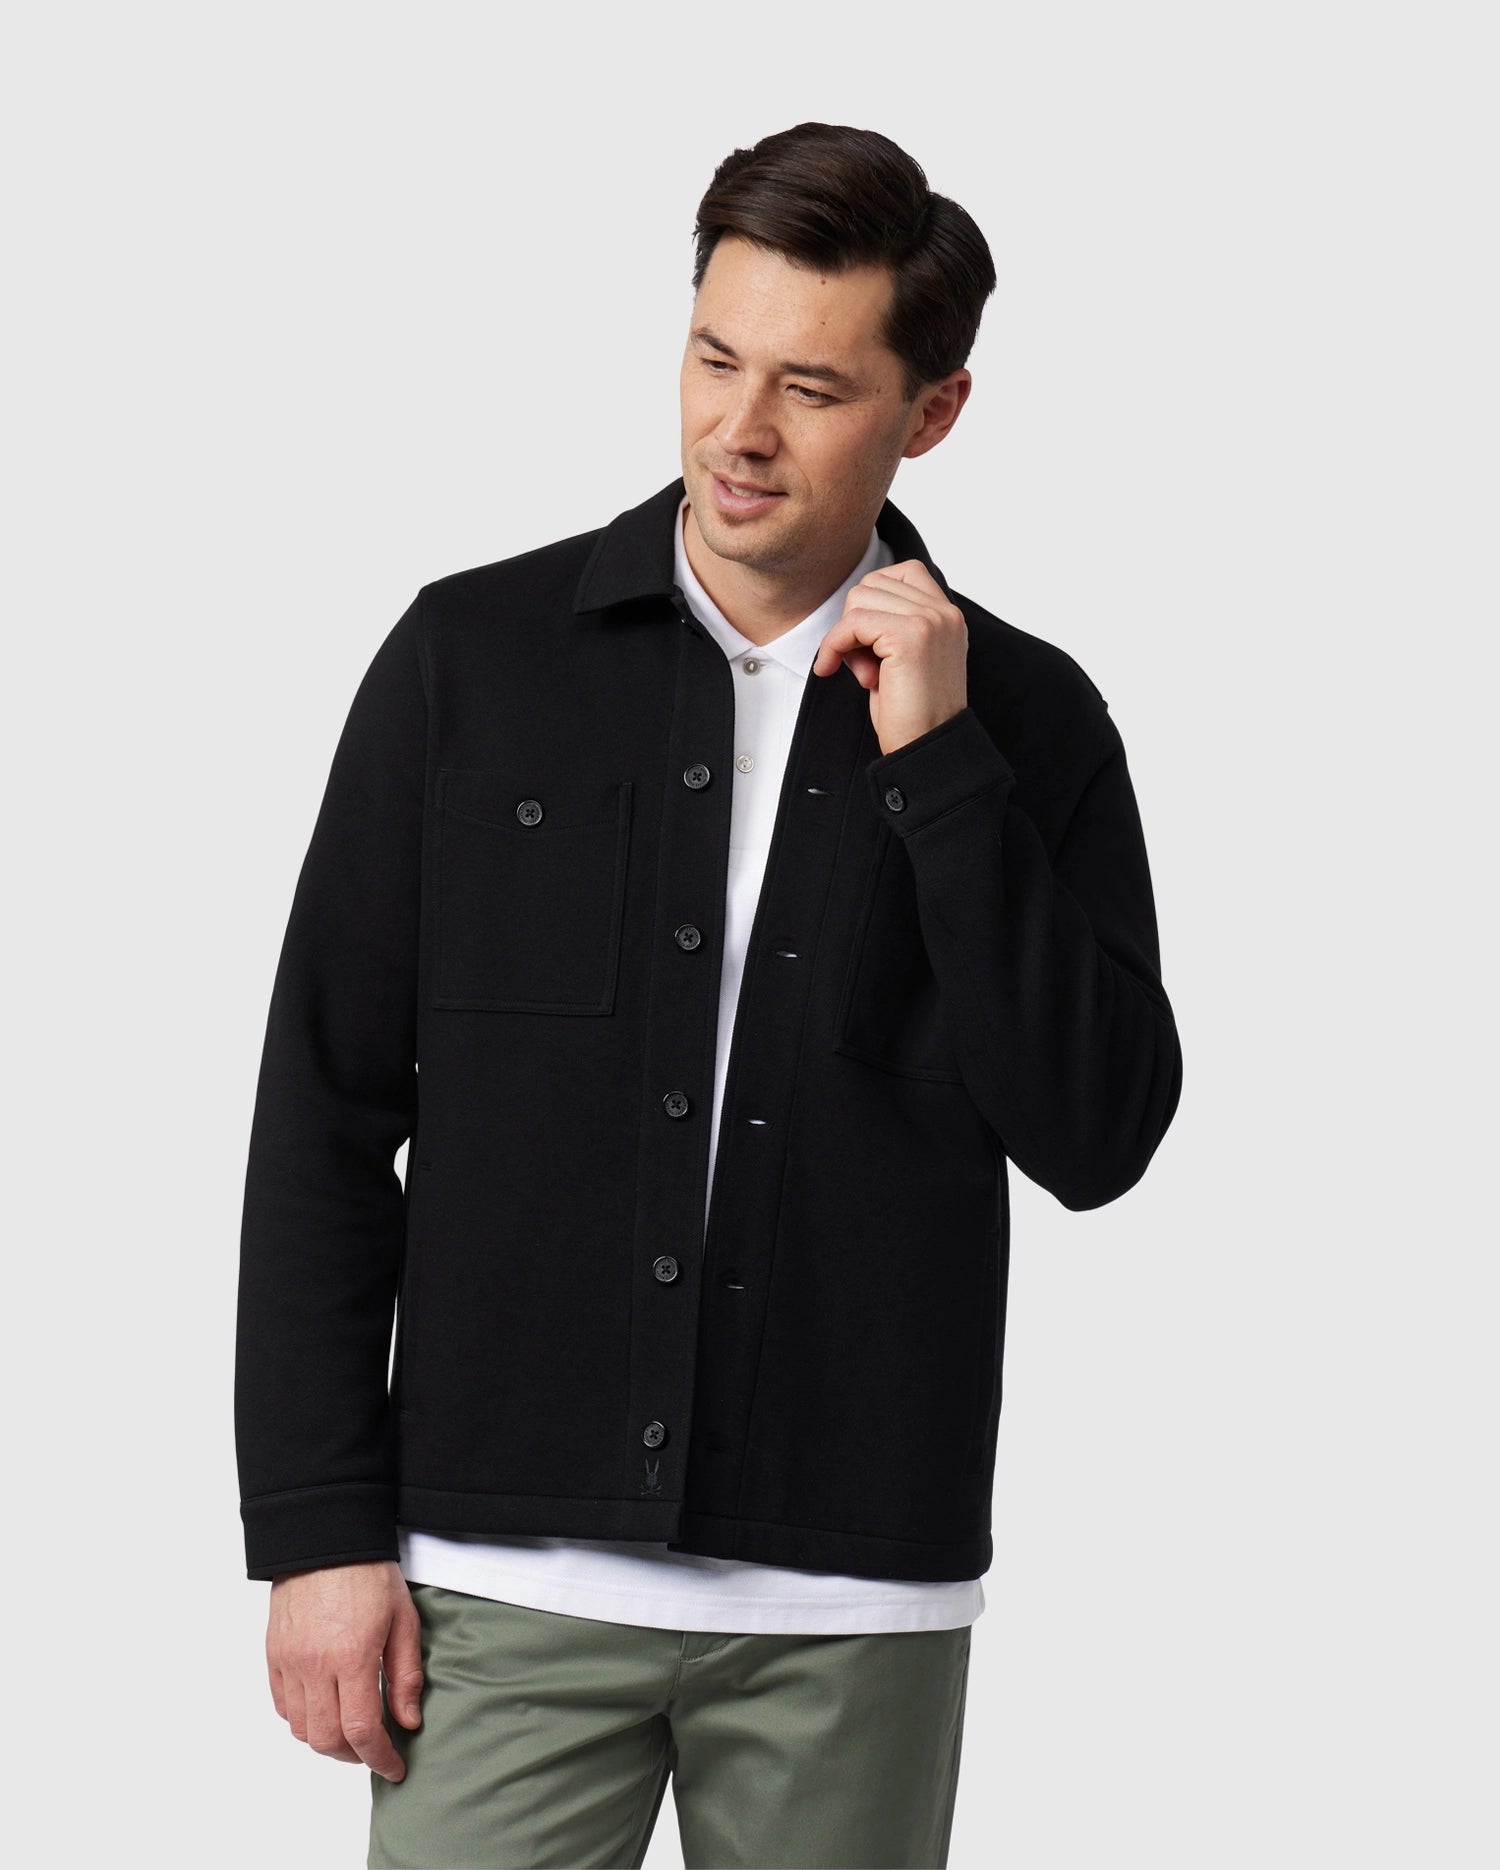 Men's Jacket Men Flap Pocket Coat Jacket for Men (Color : Beige, Size :  Large) : : Clothing, Shoes & Accessories